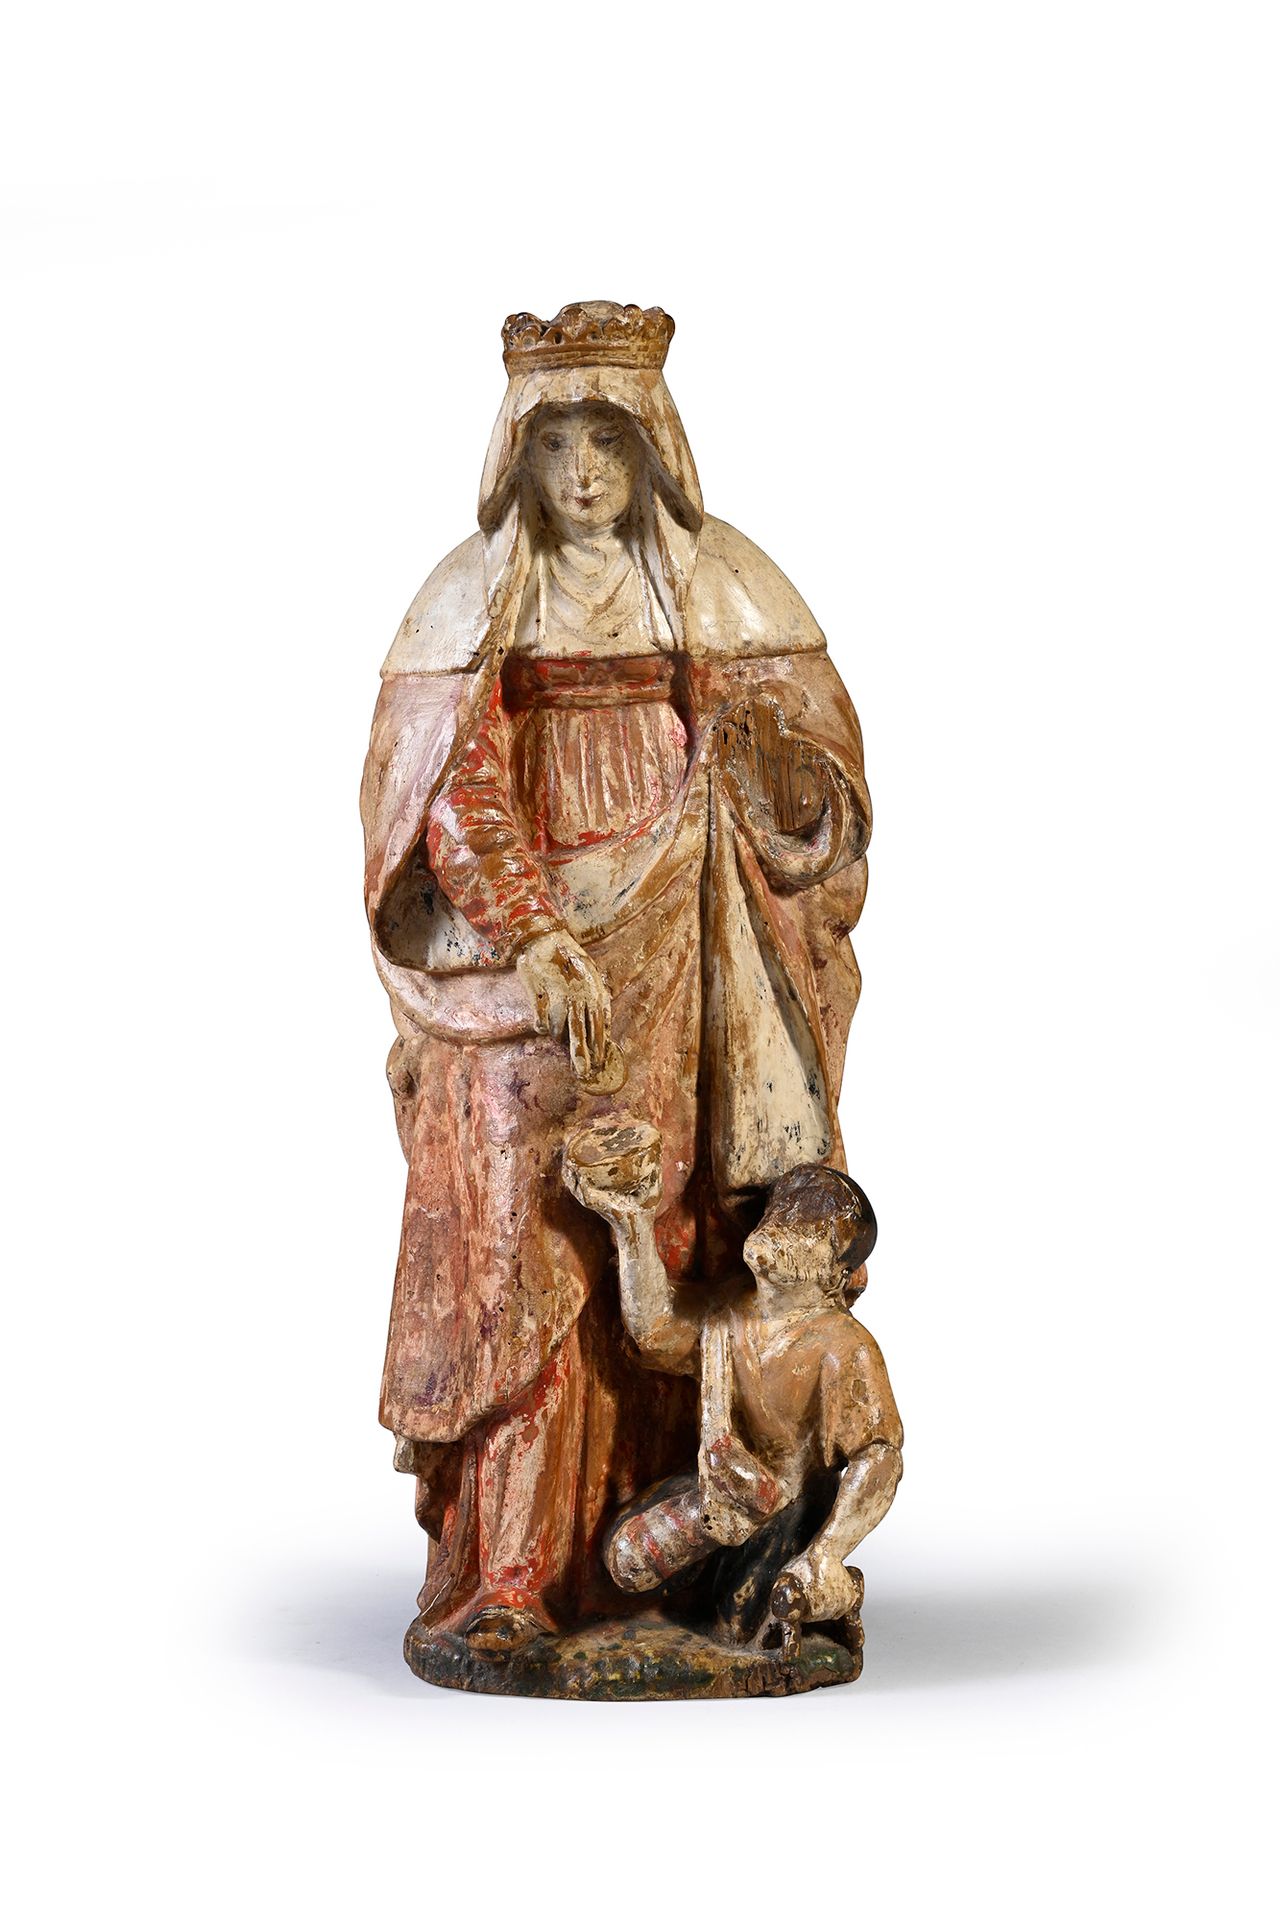 Null 匈牙利（或葡萄牙）的圣伊丽莎白，胡桃木材质，圆形雕刻，多色染色。
16世纪下半叶。
H.40厘米
(可见缺失部分，特别是左臂，修复后)